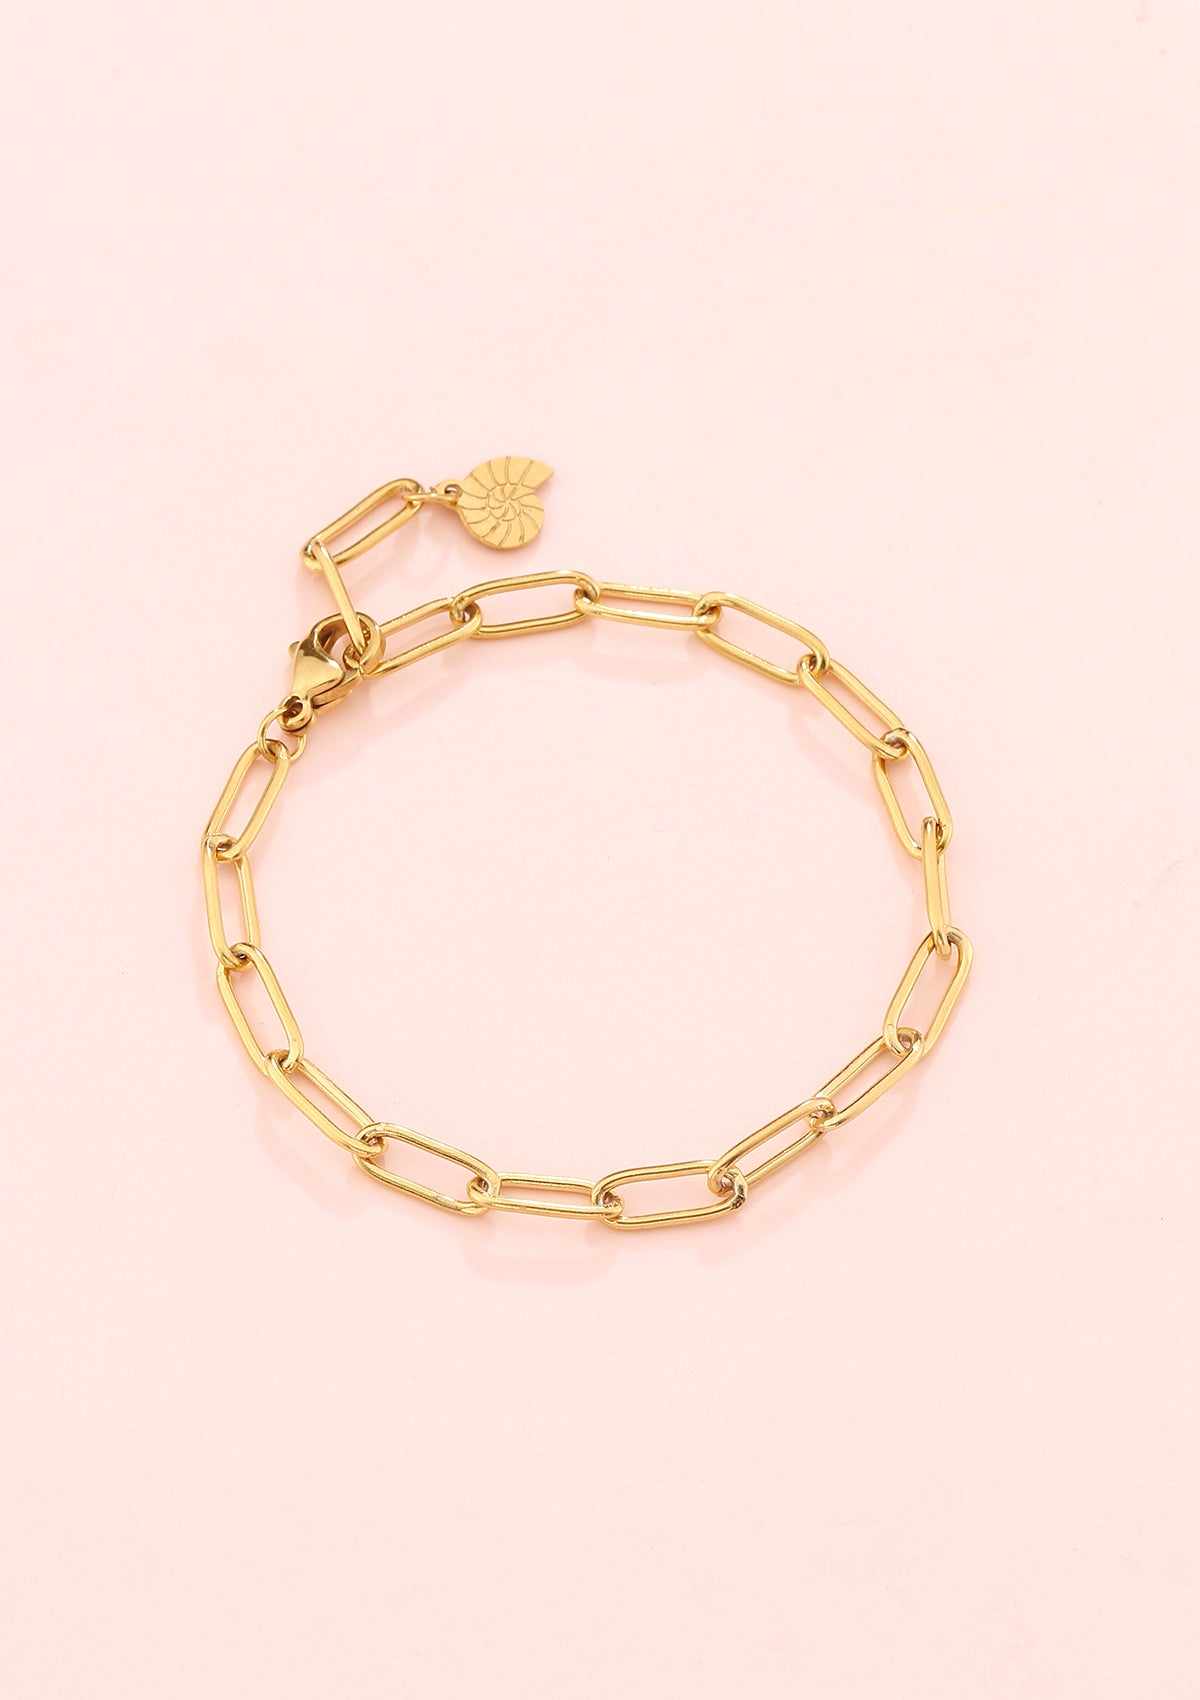 Chunky Chain Bracelet Gold